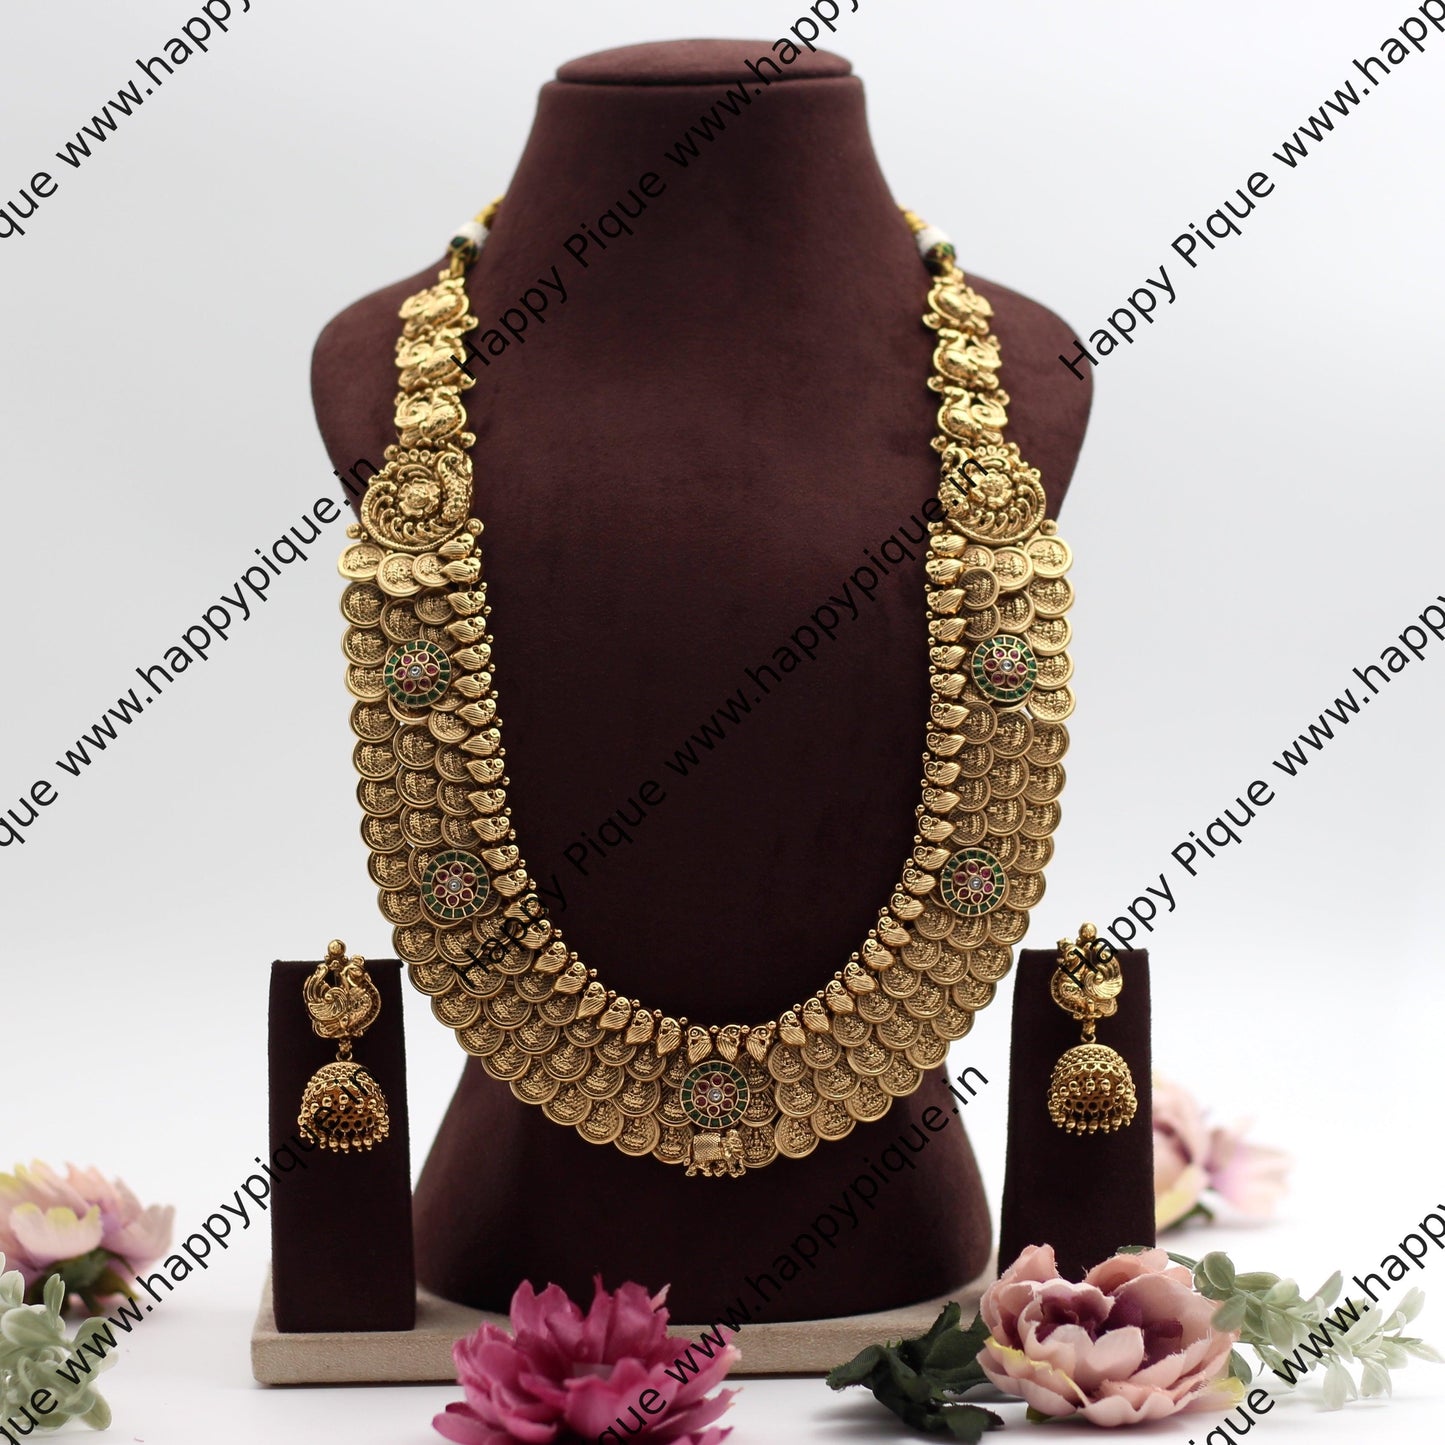 Real Gold Design 3 Line Lakshmi Coin Heavy Bridal Haaram